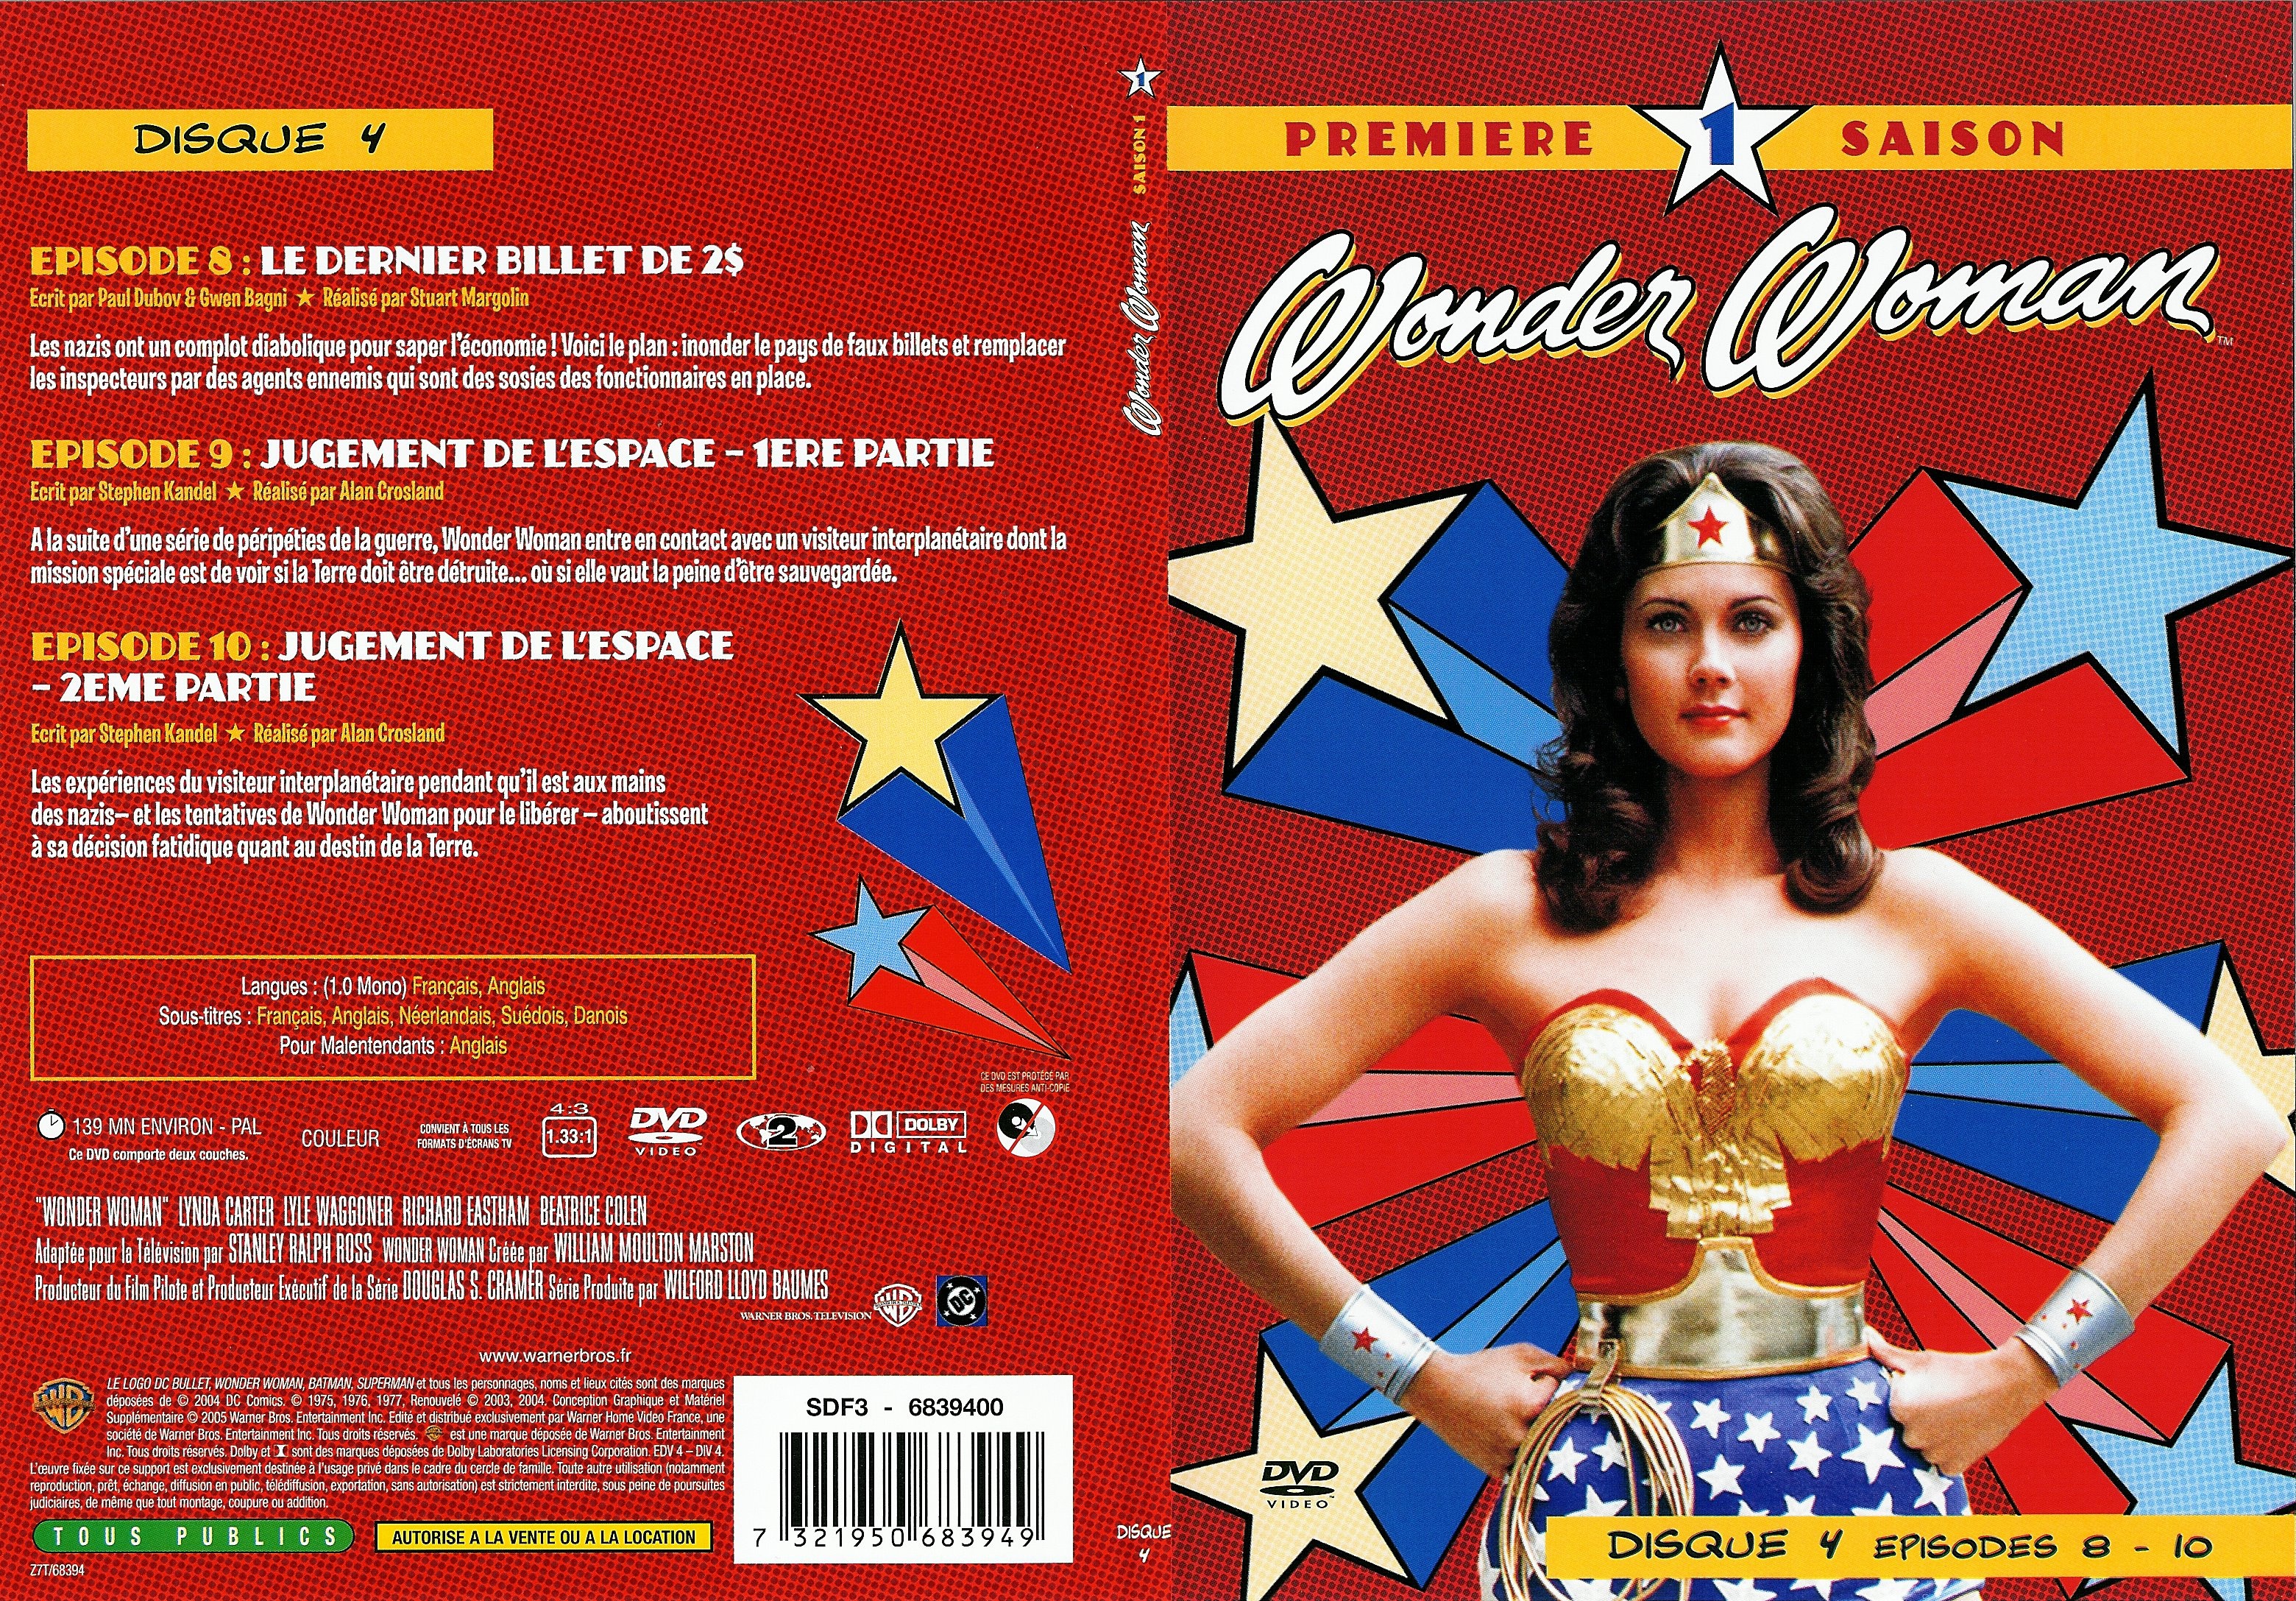 Jaquette DVD Wonder woman Saison 1 DVD 4